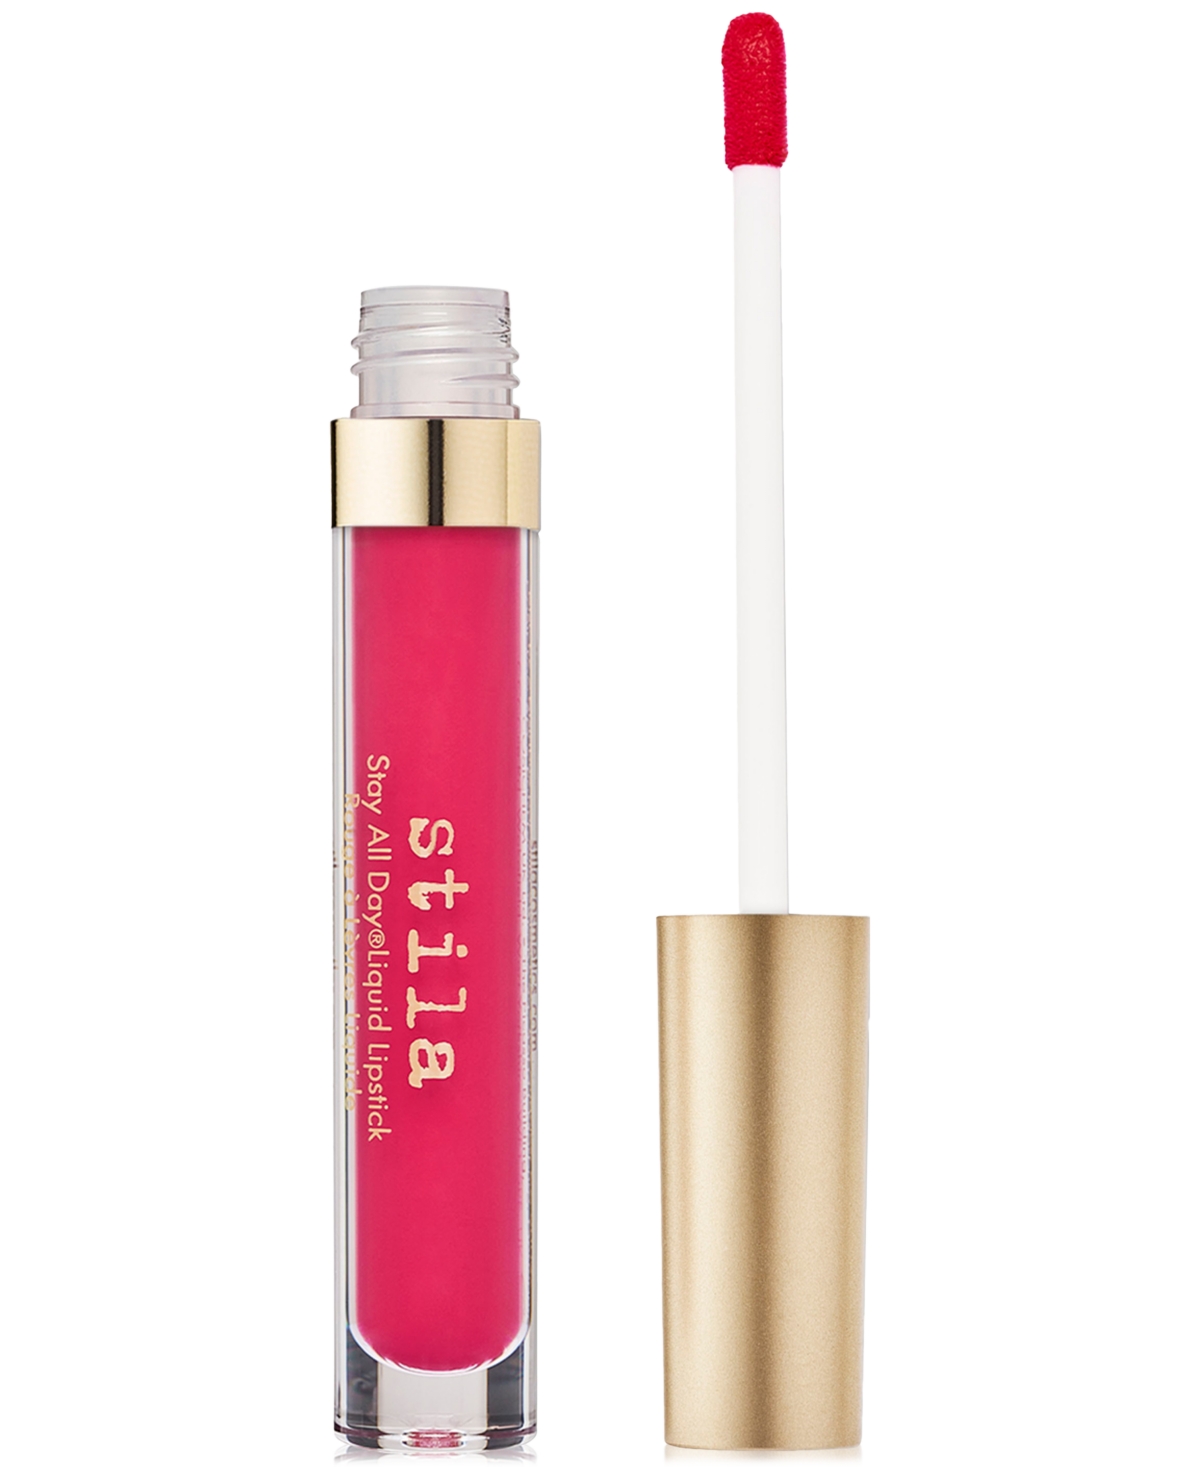 Stila Stay All Day Shimmer Liquid Lipstick In Sheer Felice